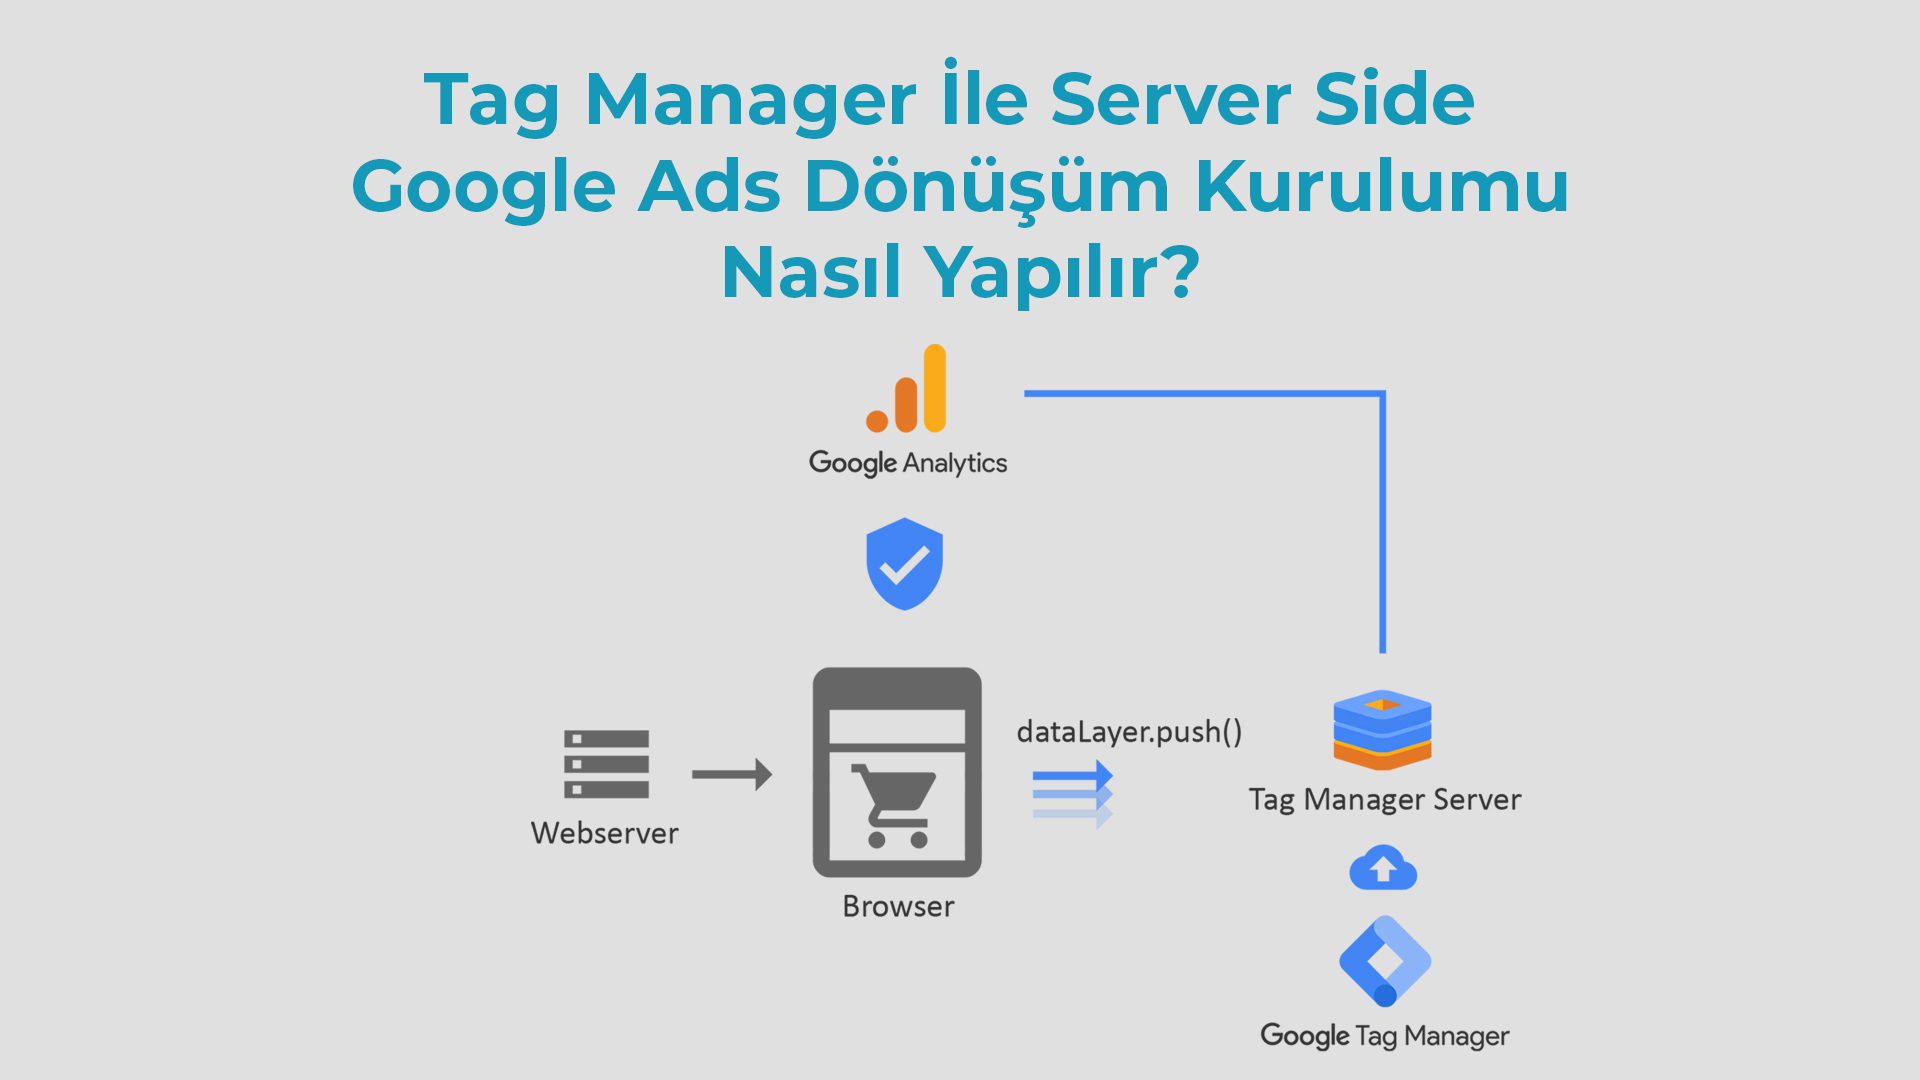 Tag Manager Ile Server Side Google Ads Donusum Kurulumu Nasil Yapilir